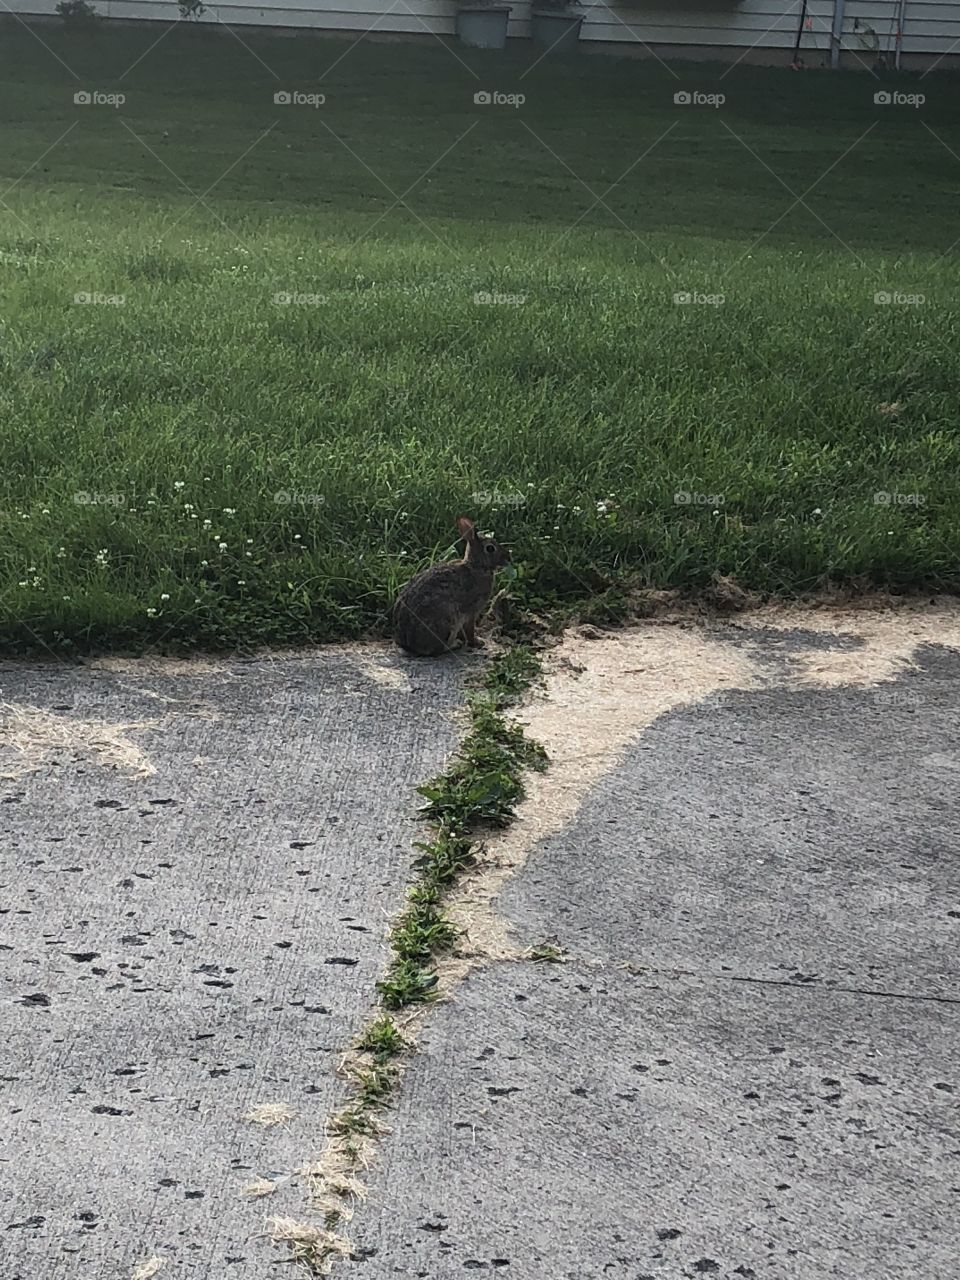 Rabbit sitting in driveway.